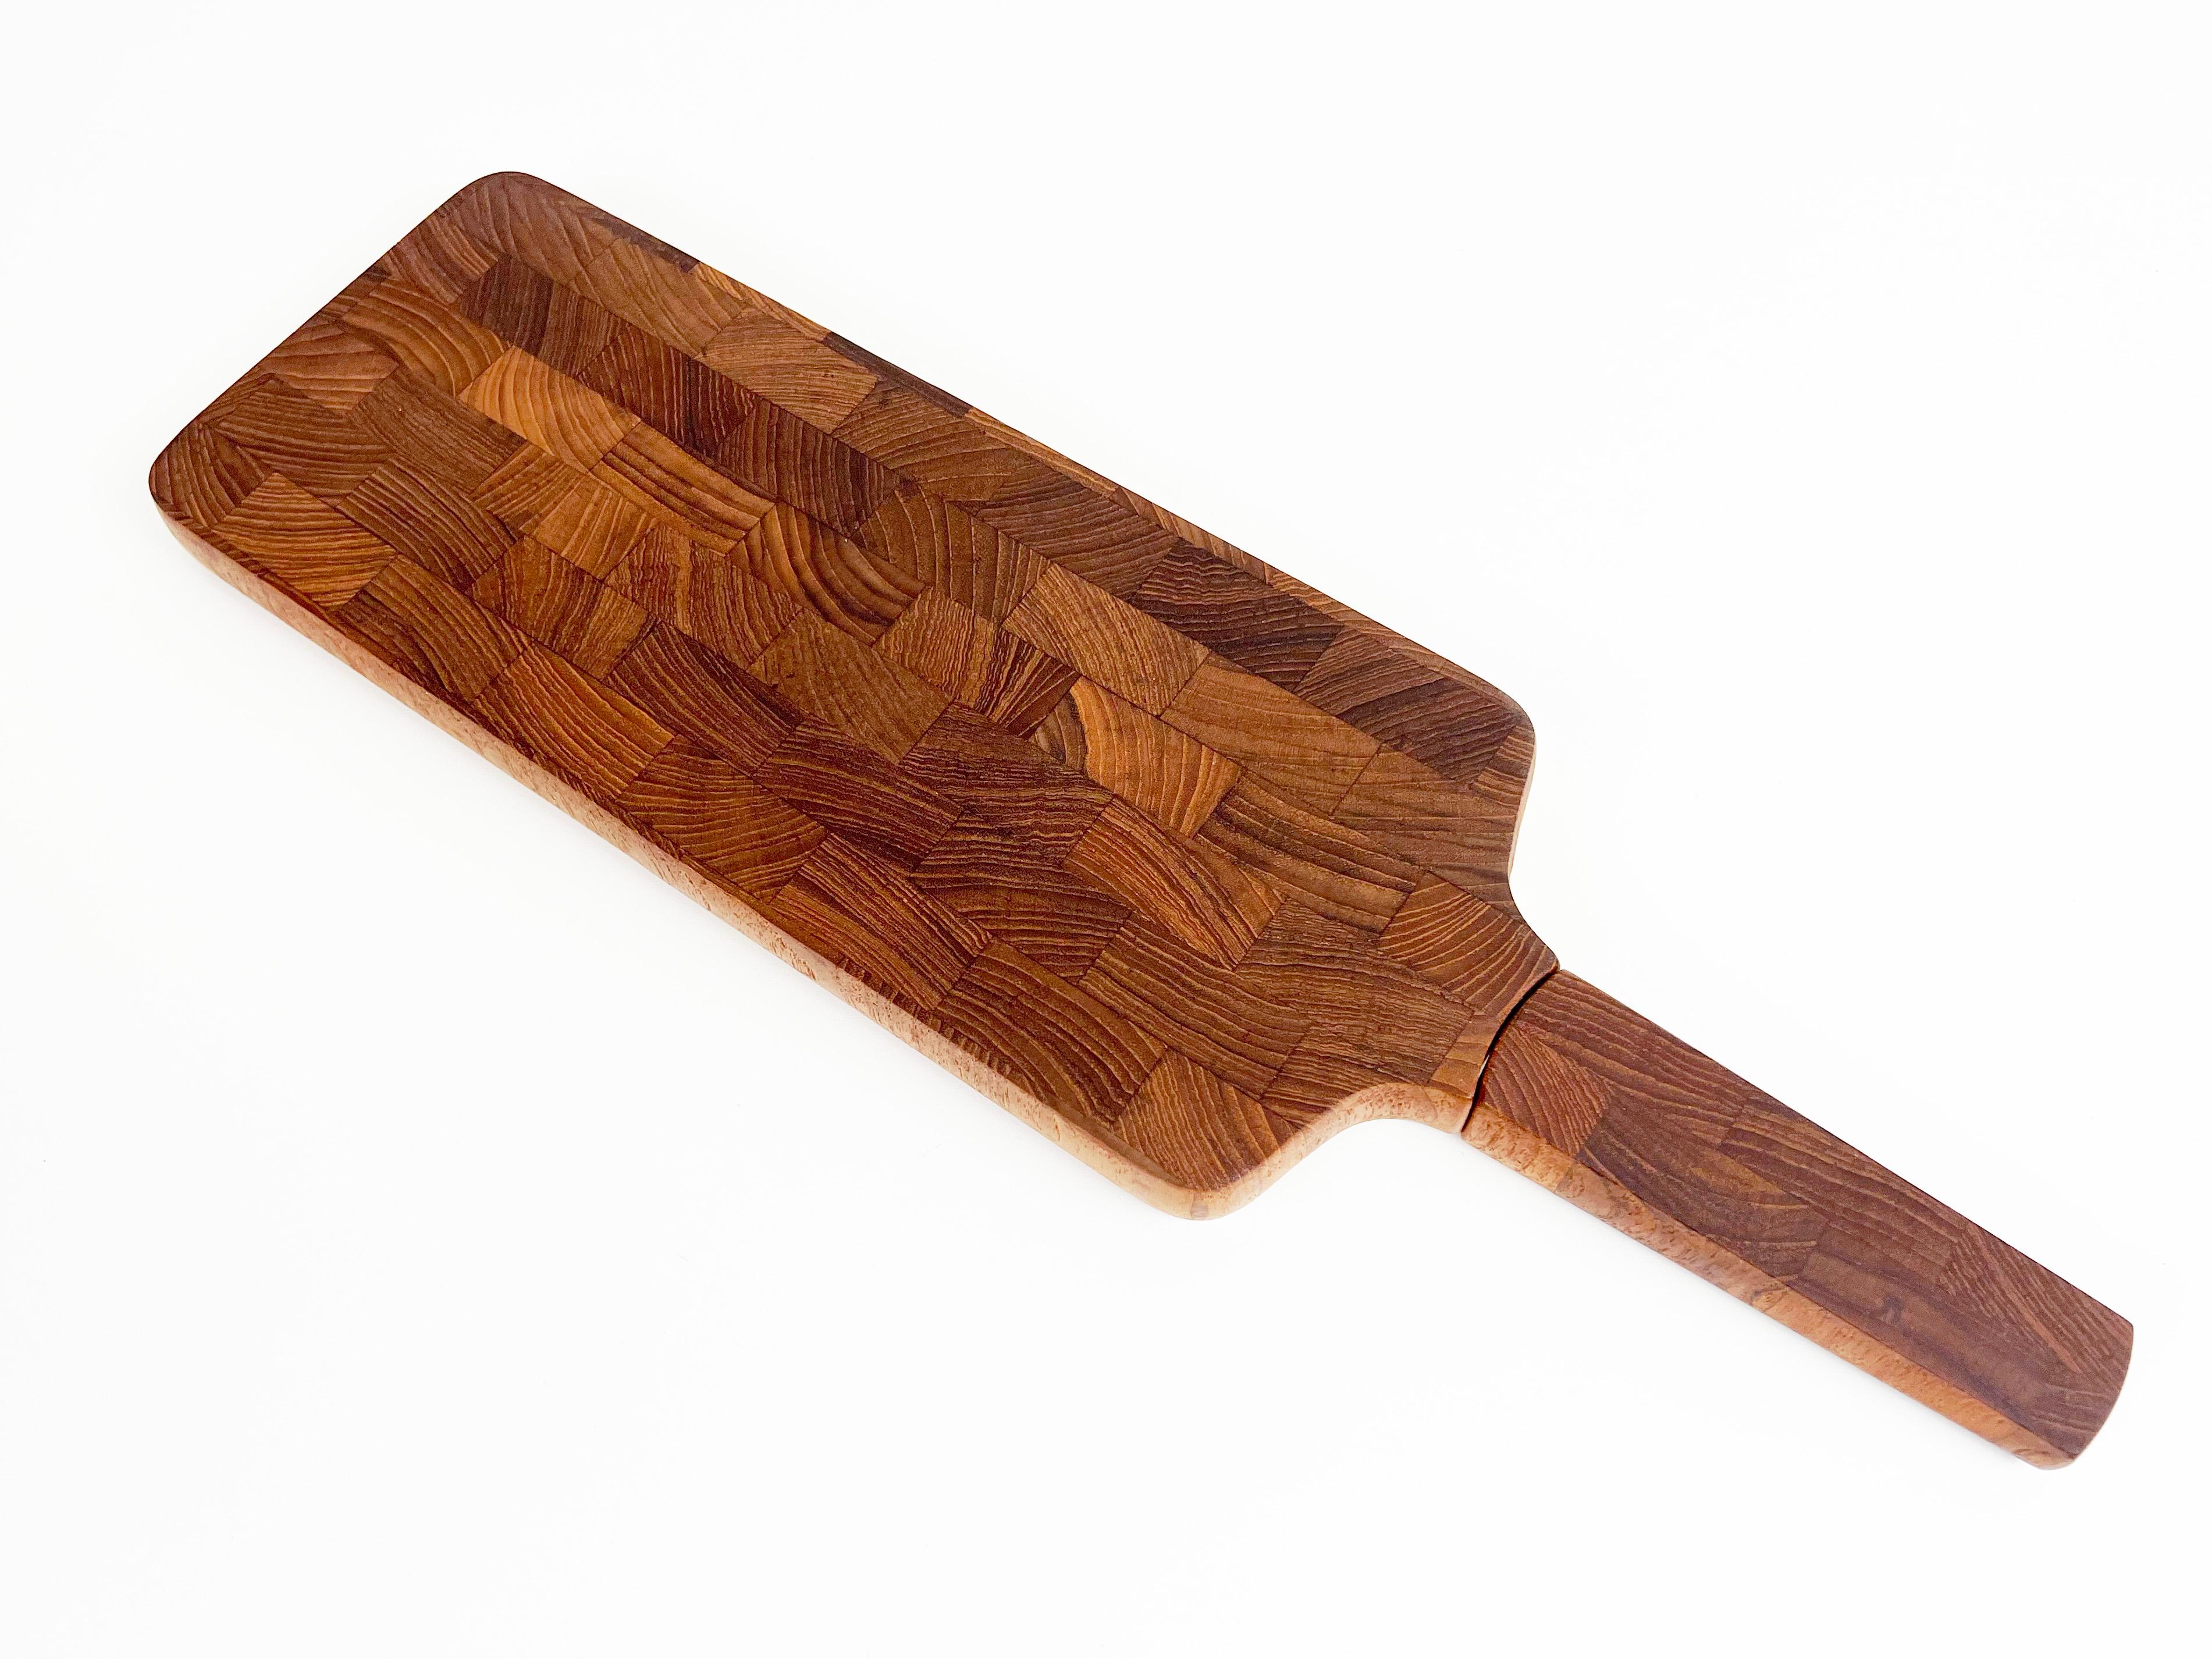 Scandinavian Modern Dansk End Grain Teak Paddle Shaped Serving Board with Built in Knife For Sale